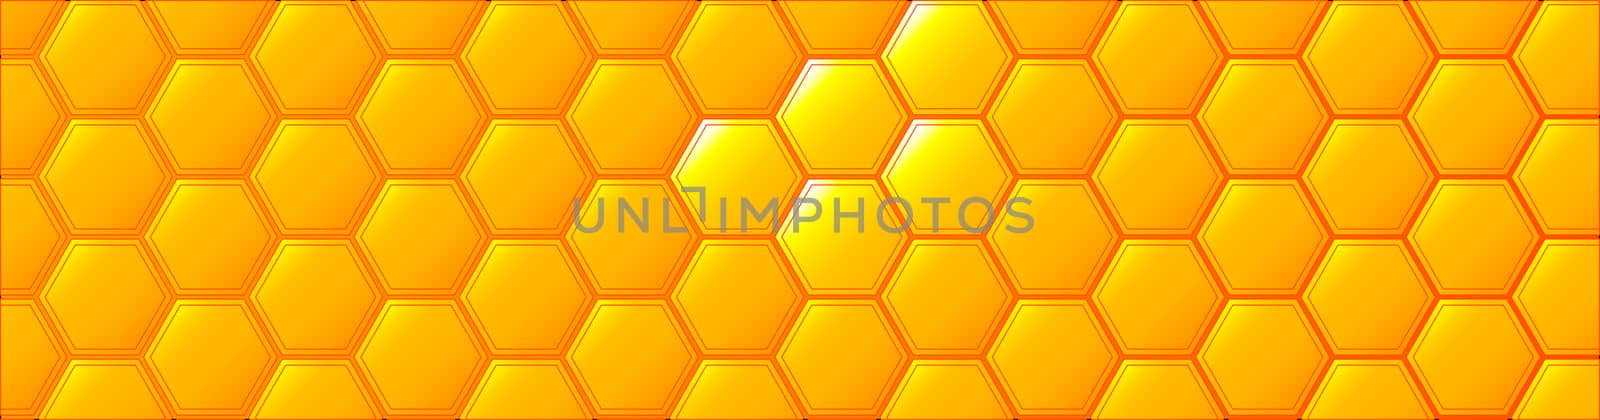 Honeycombe Hexagonal Web Banner background by Bigalbaloo